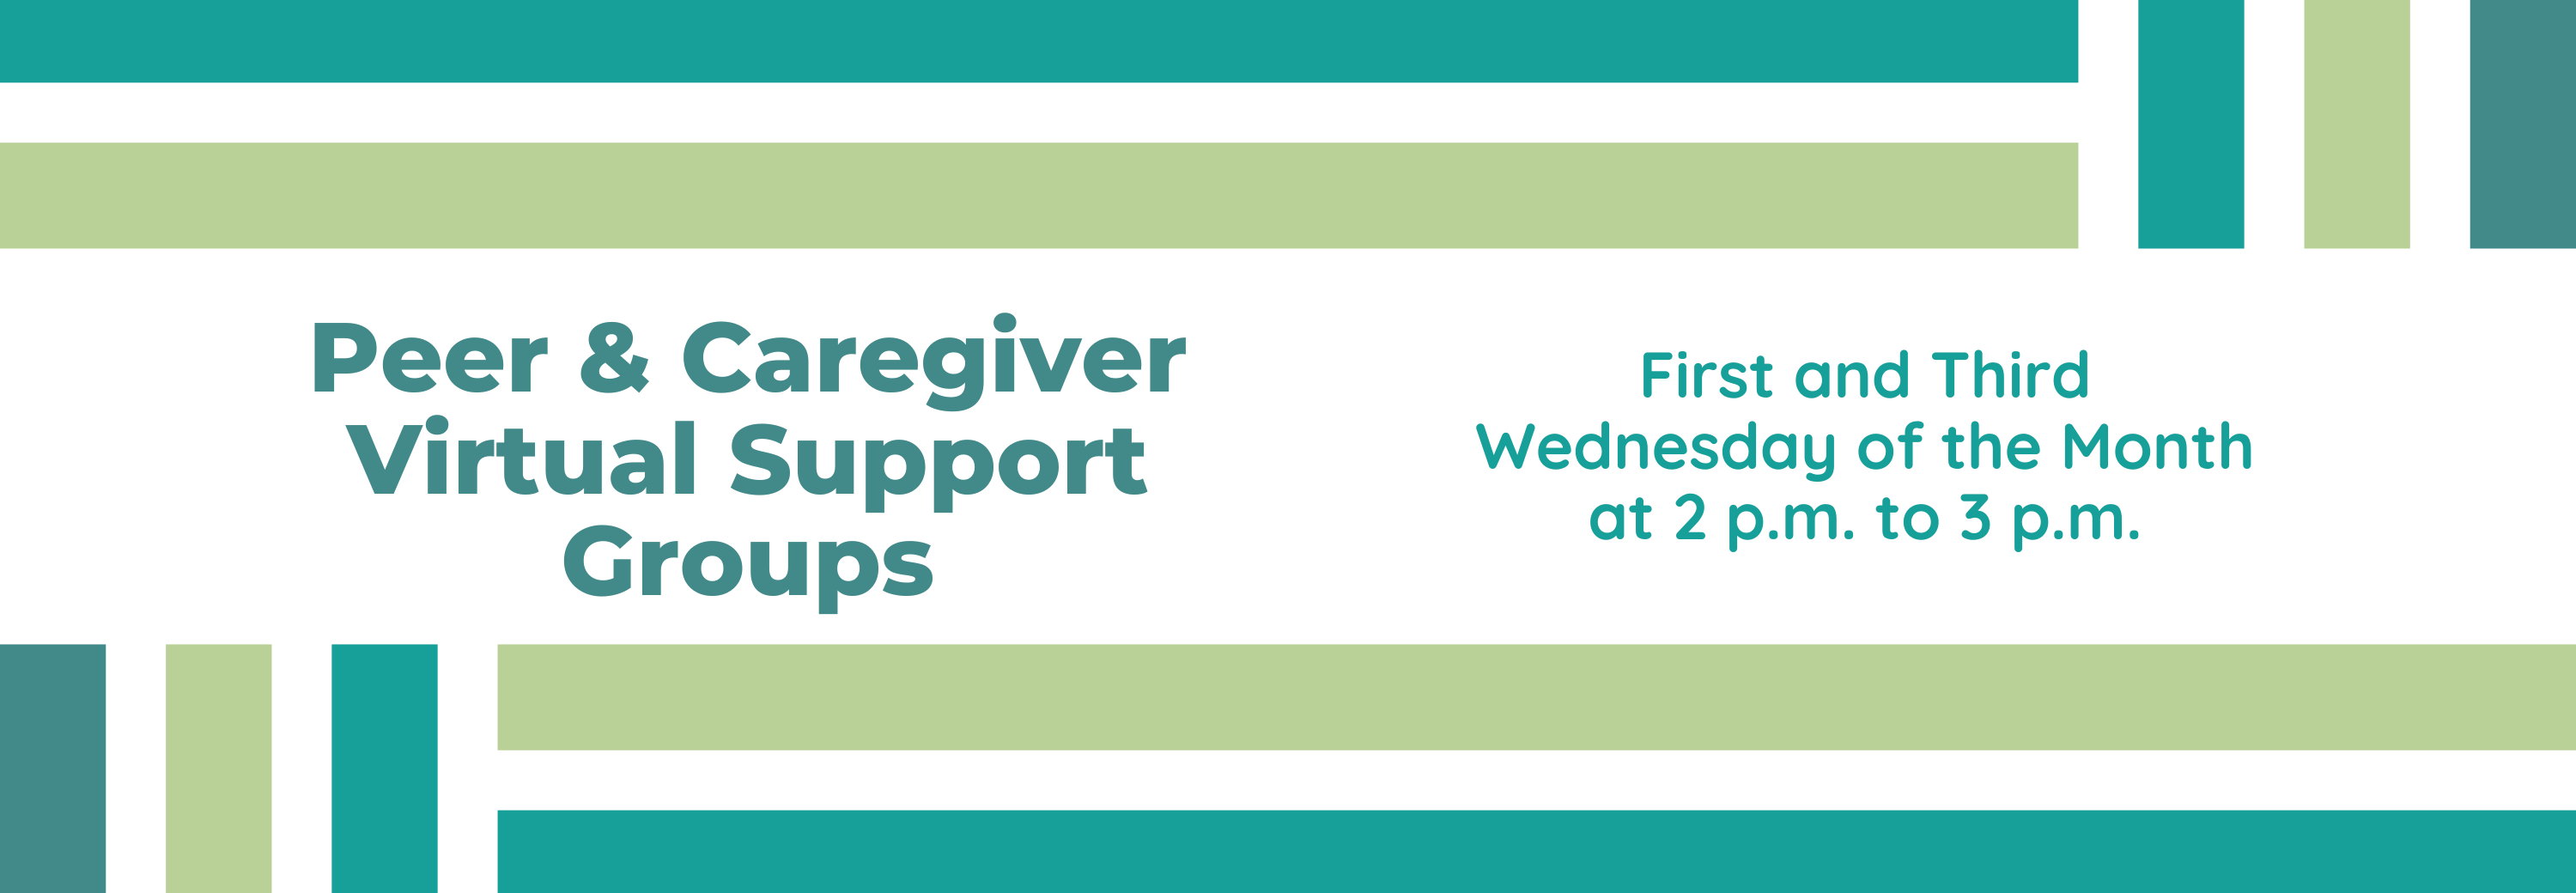 Peer & Caregiver Virtual Support Groups